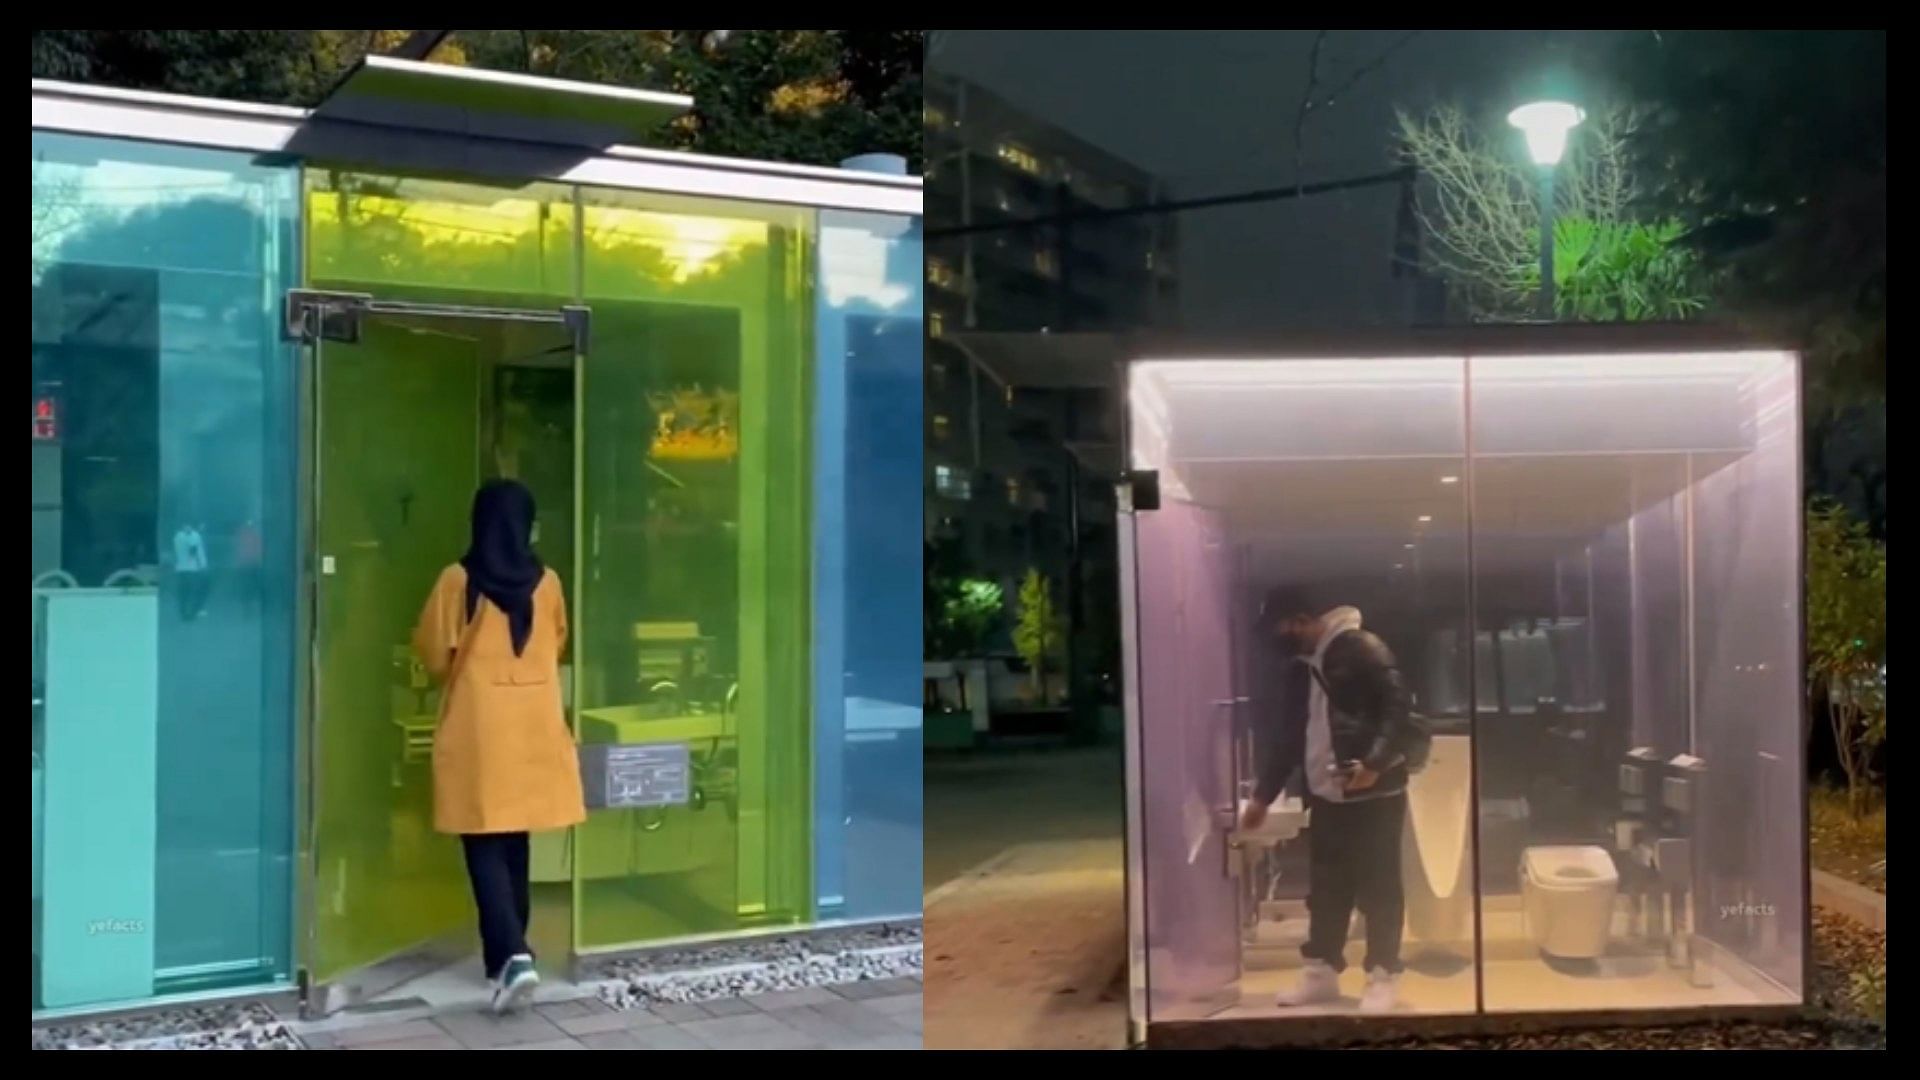 Transparent toilet unique technology of japan video viral on social media